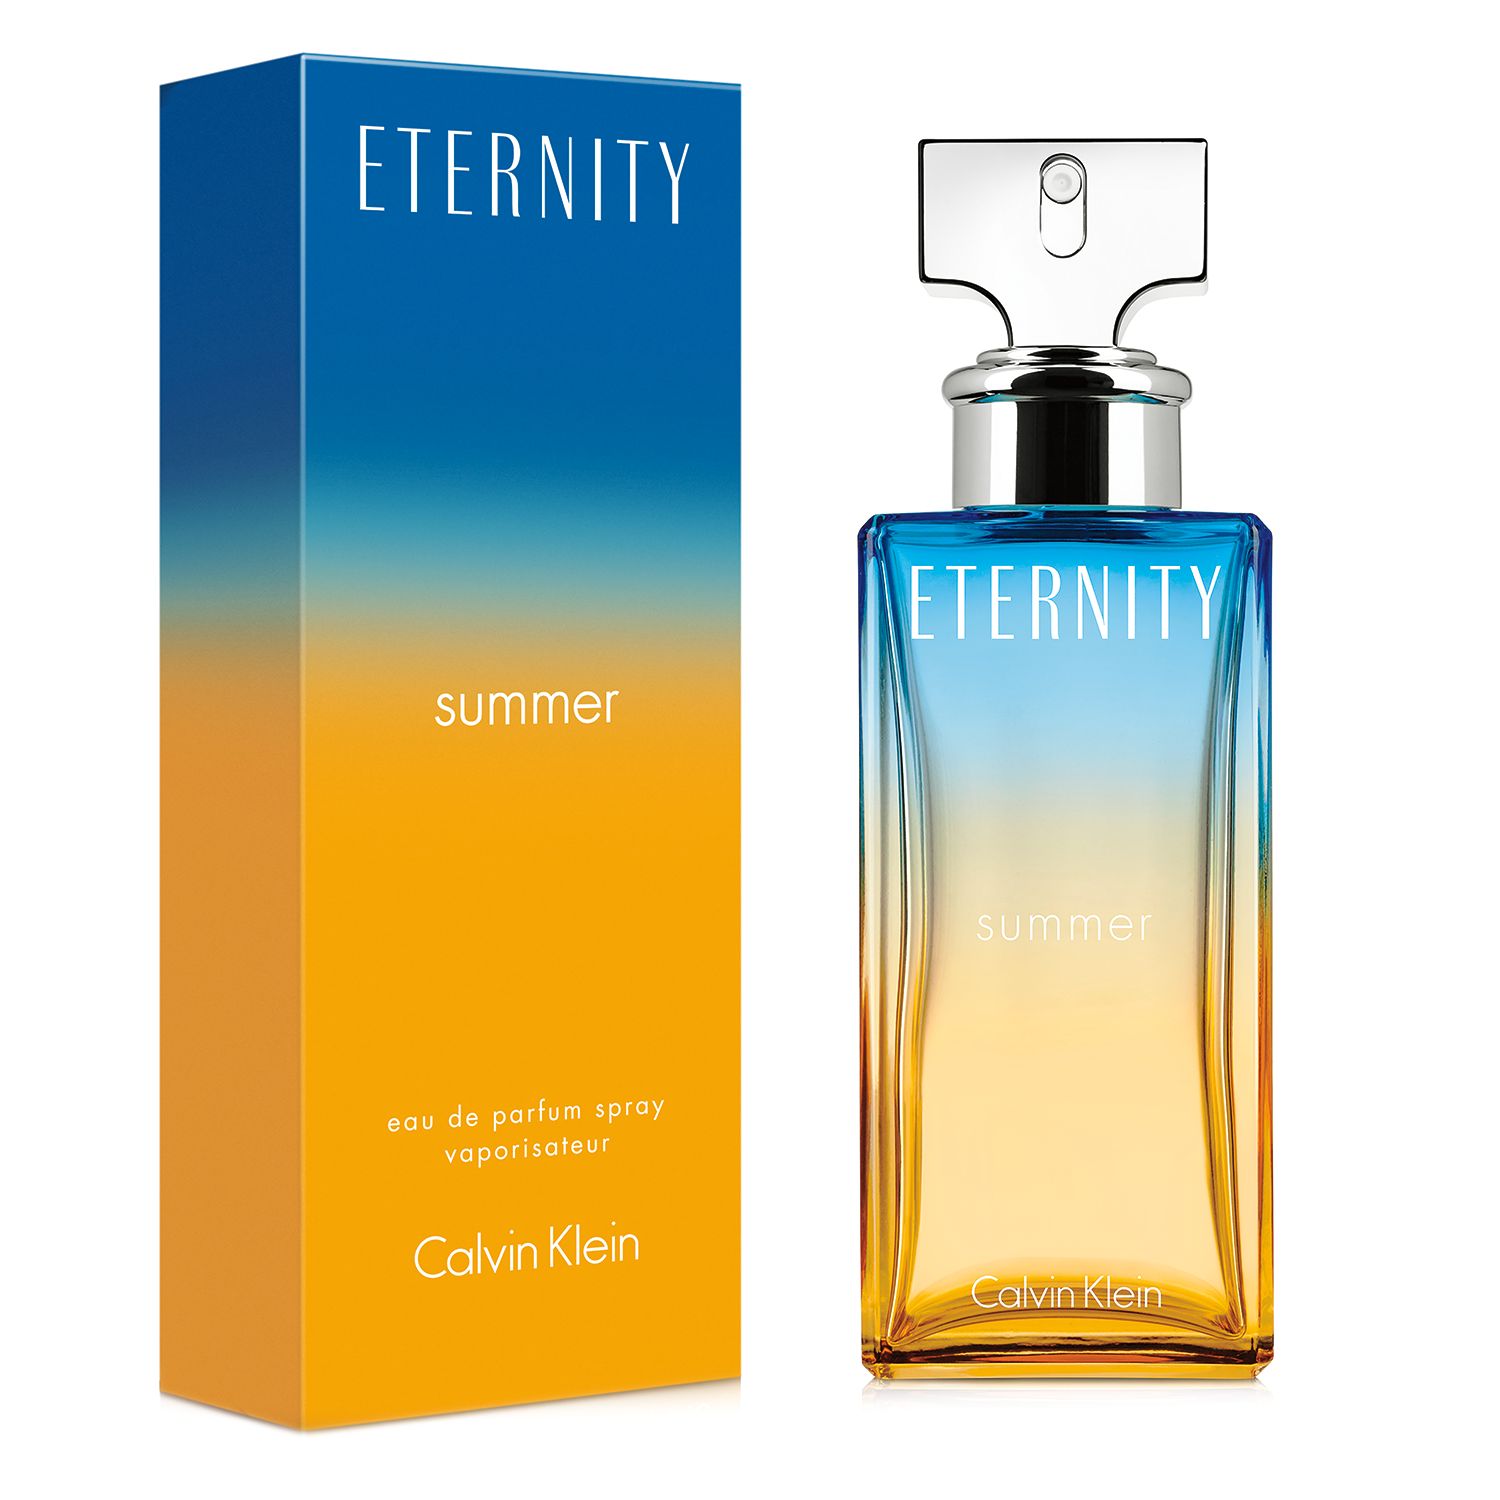 ck eternity summer perfume